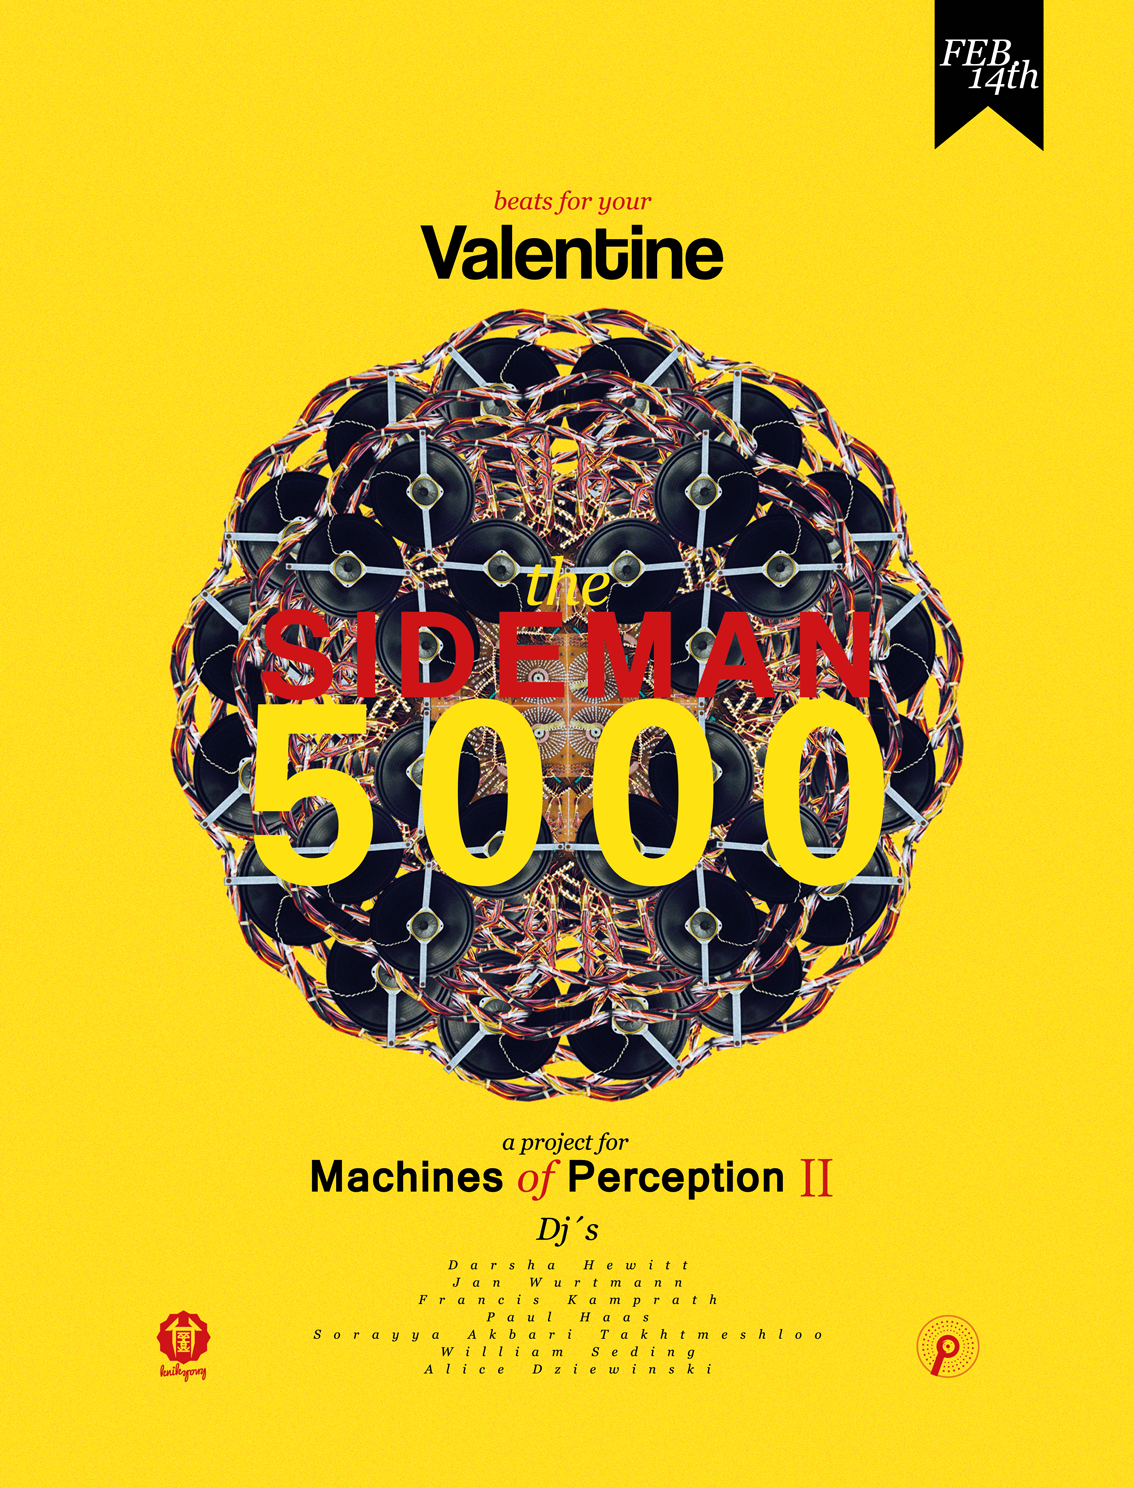 sideman 5000 bauhaus universität  mashines of perseption valentines day beatmashine